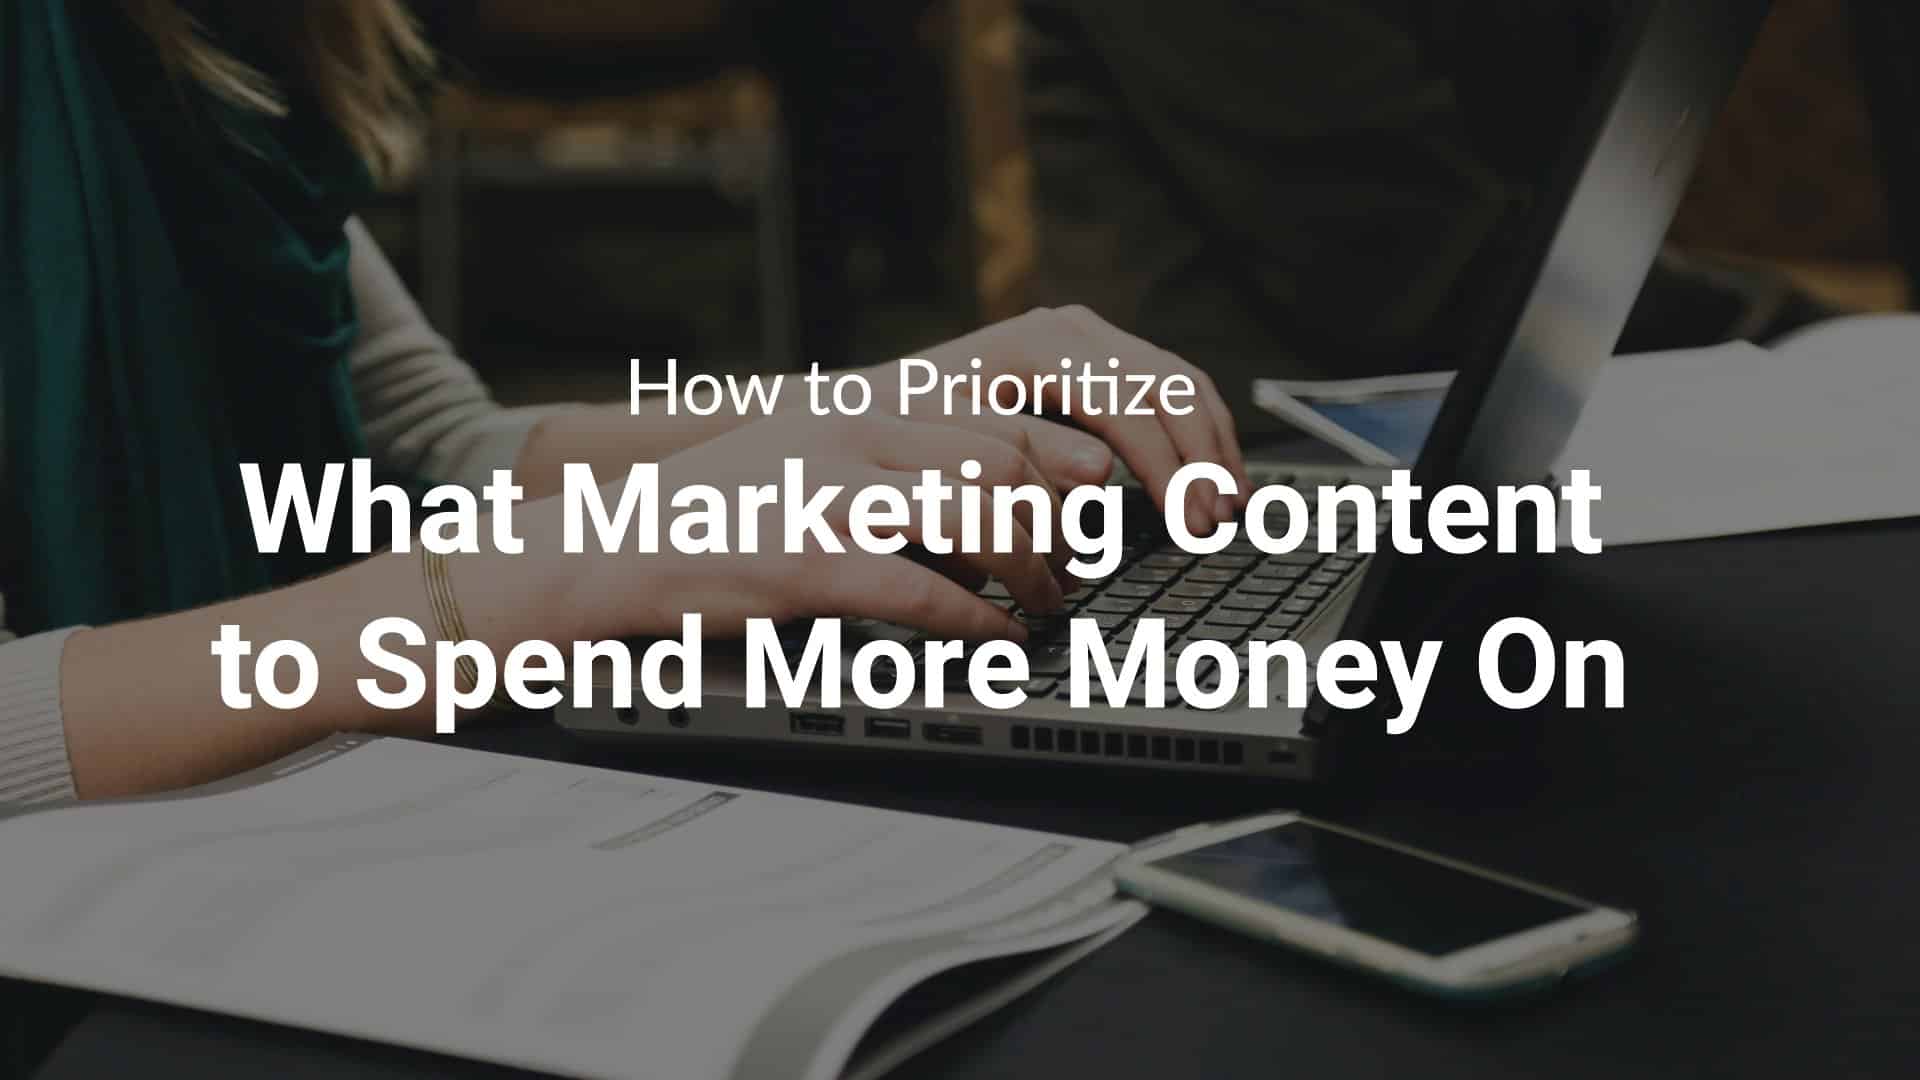 content marketing budget